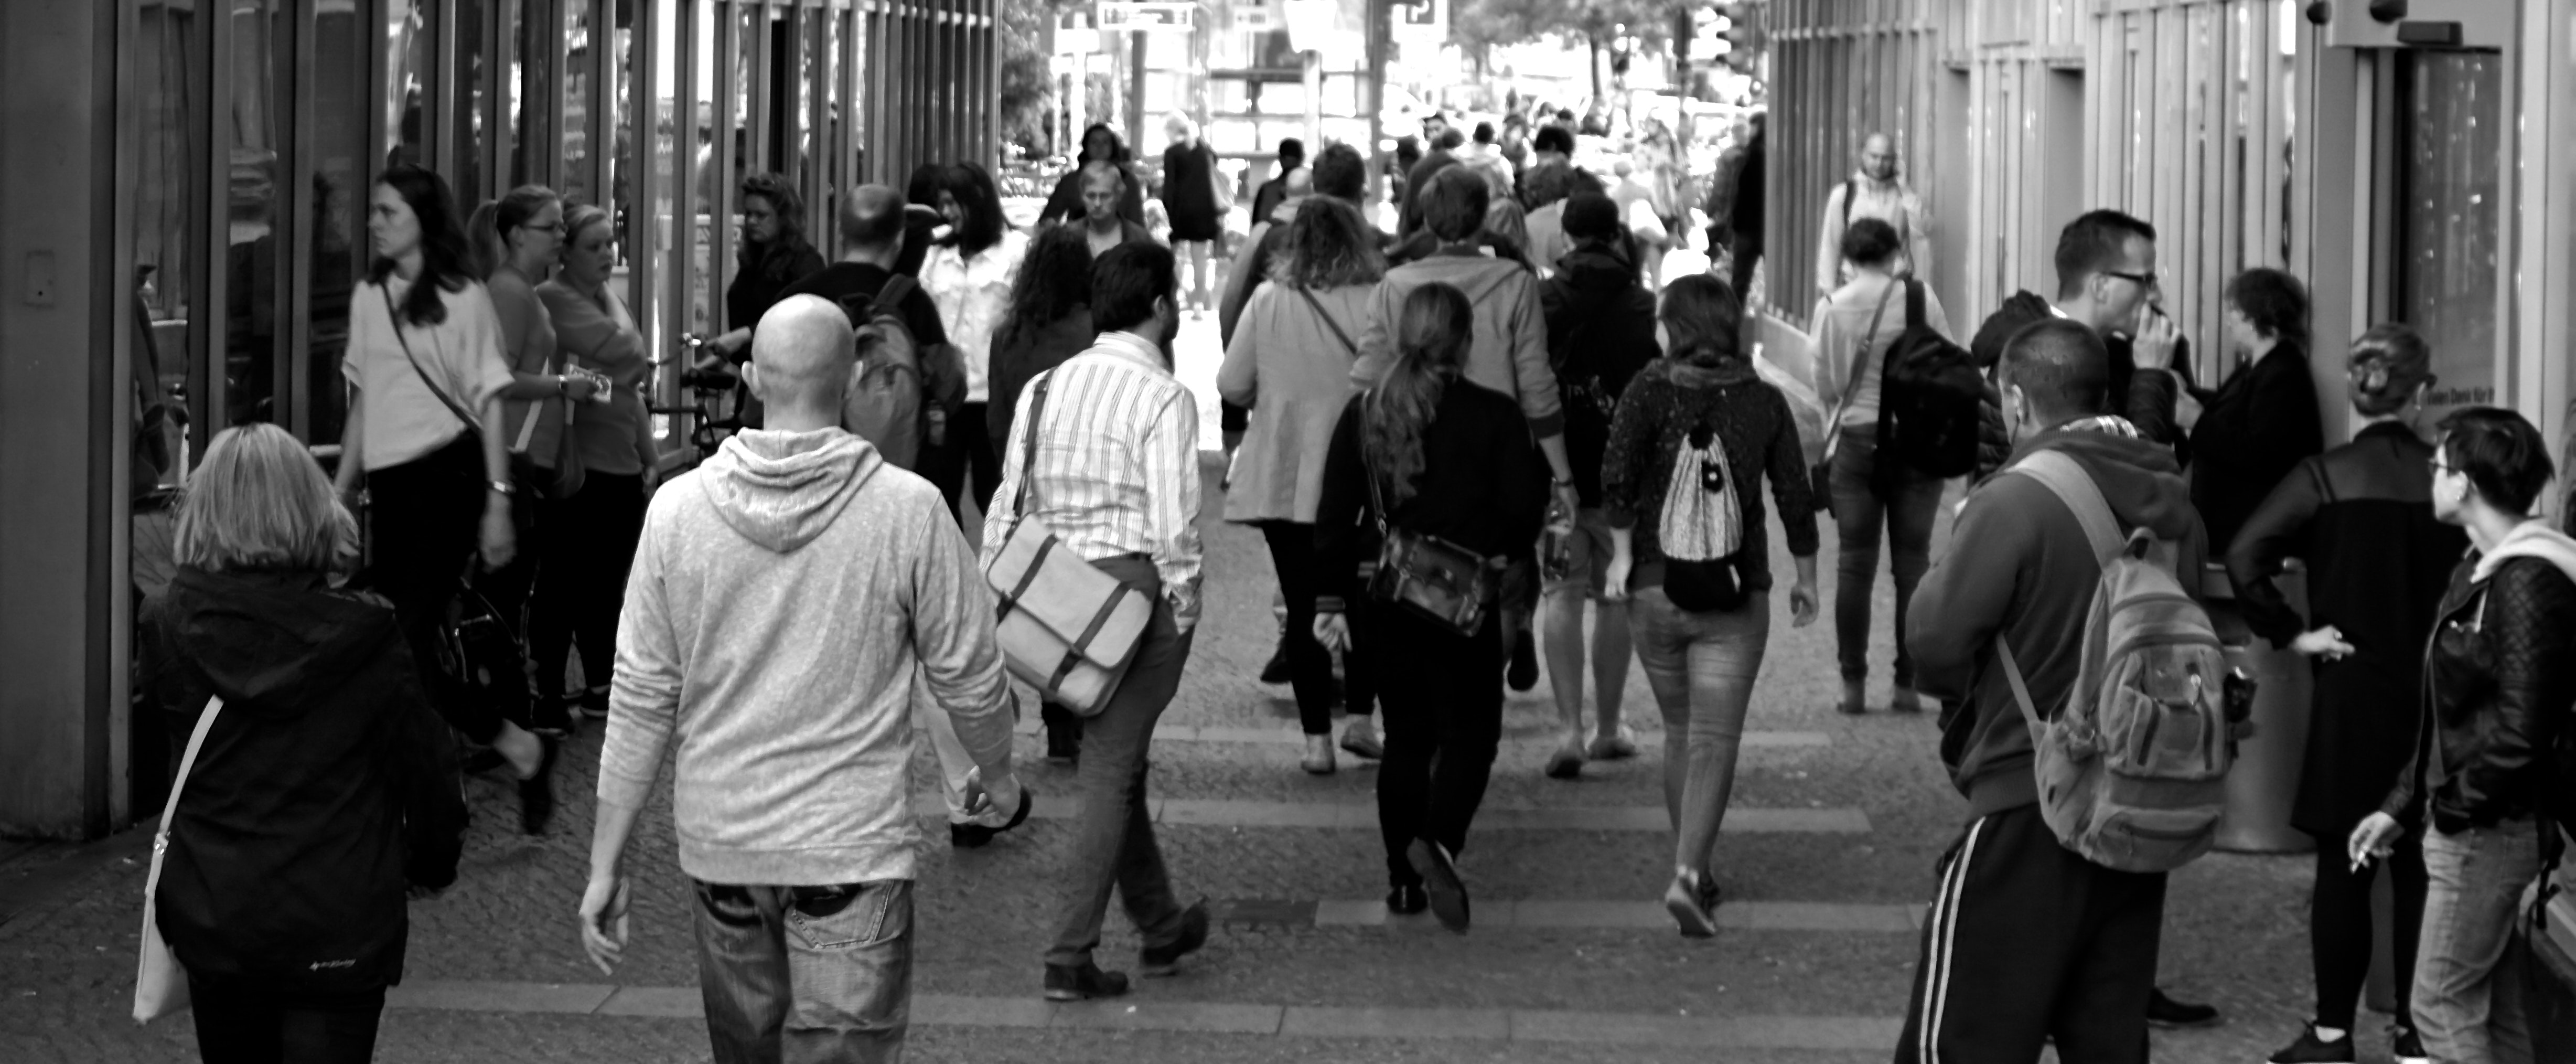 People walking photo